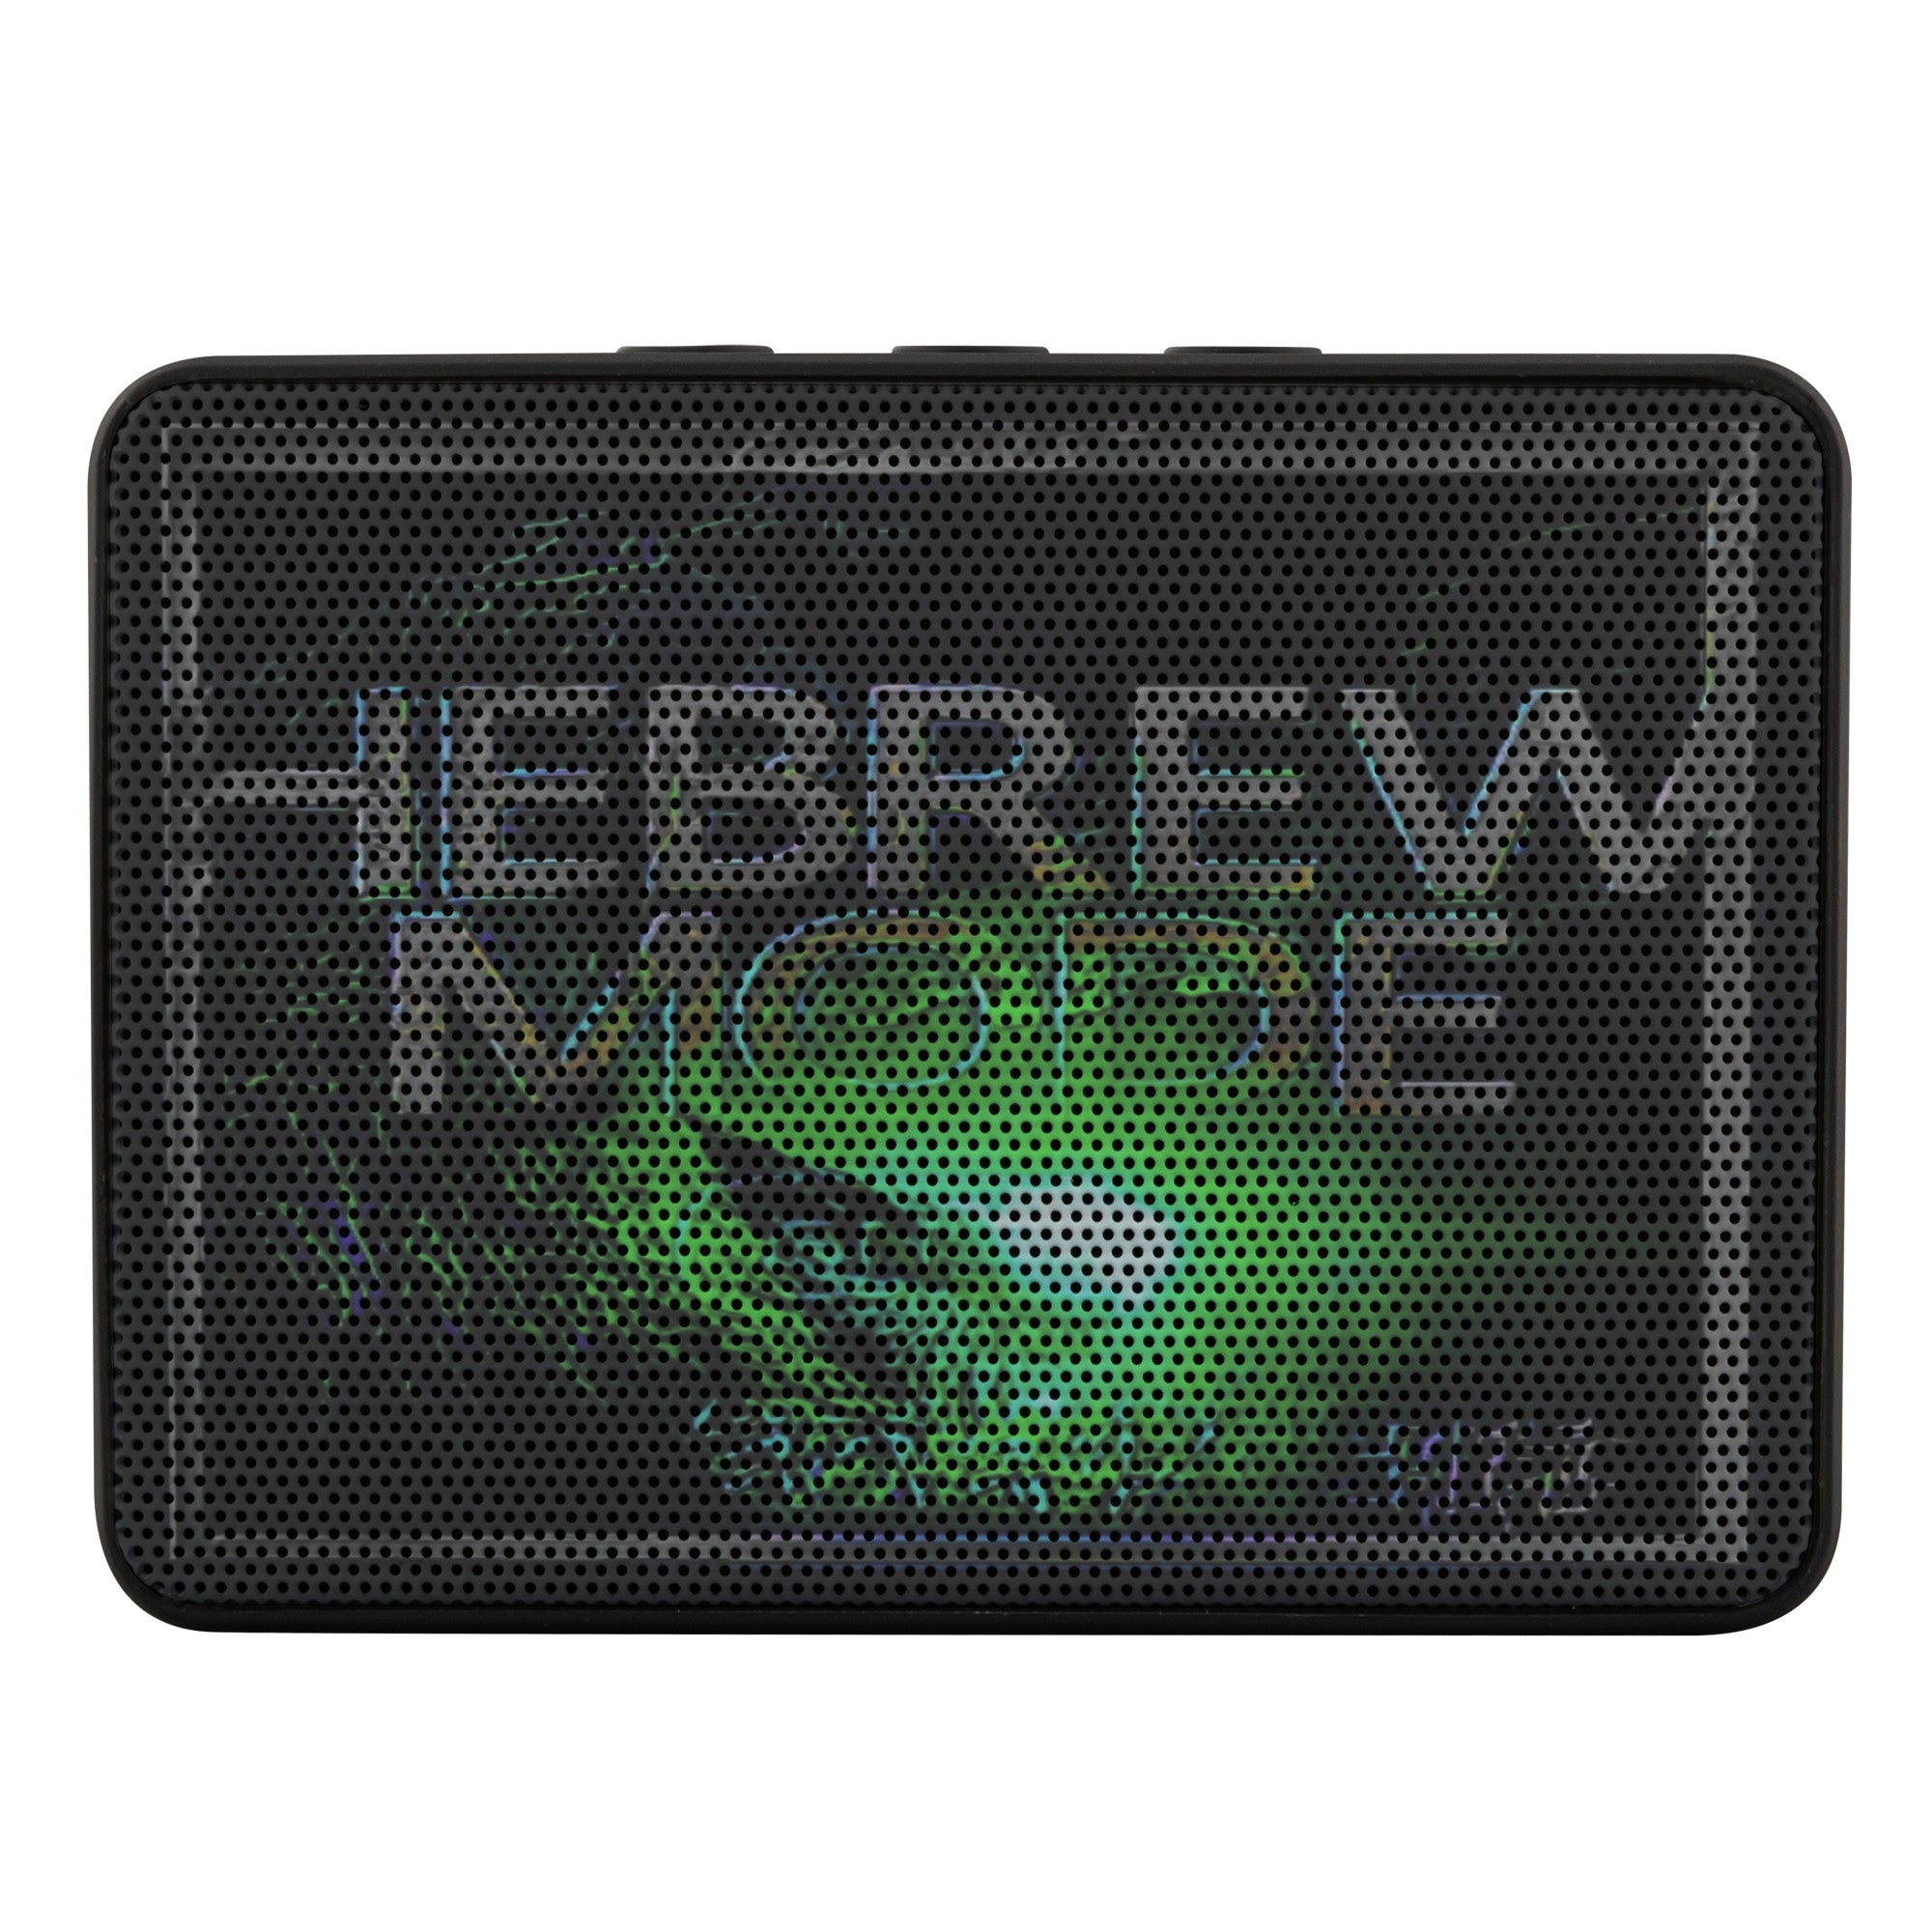 Hebrew Mode - On 01-07 Designer Boxanne Bluetooth Speaker